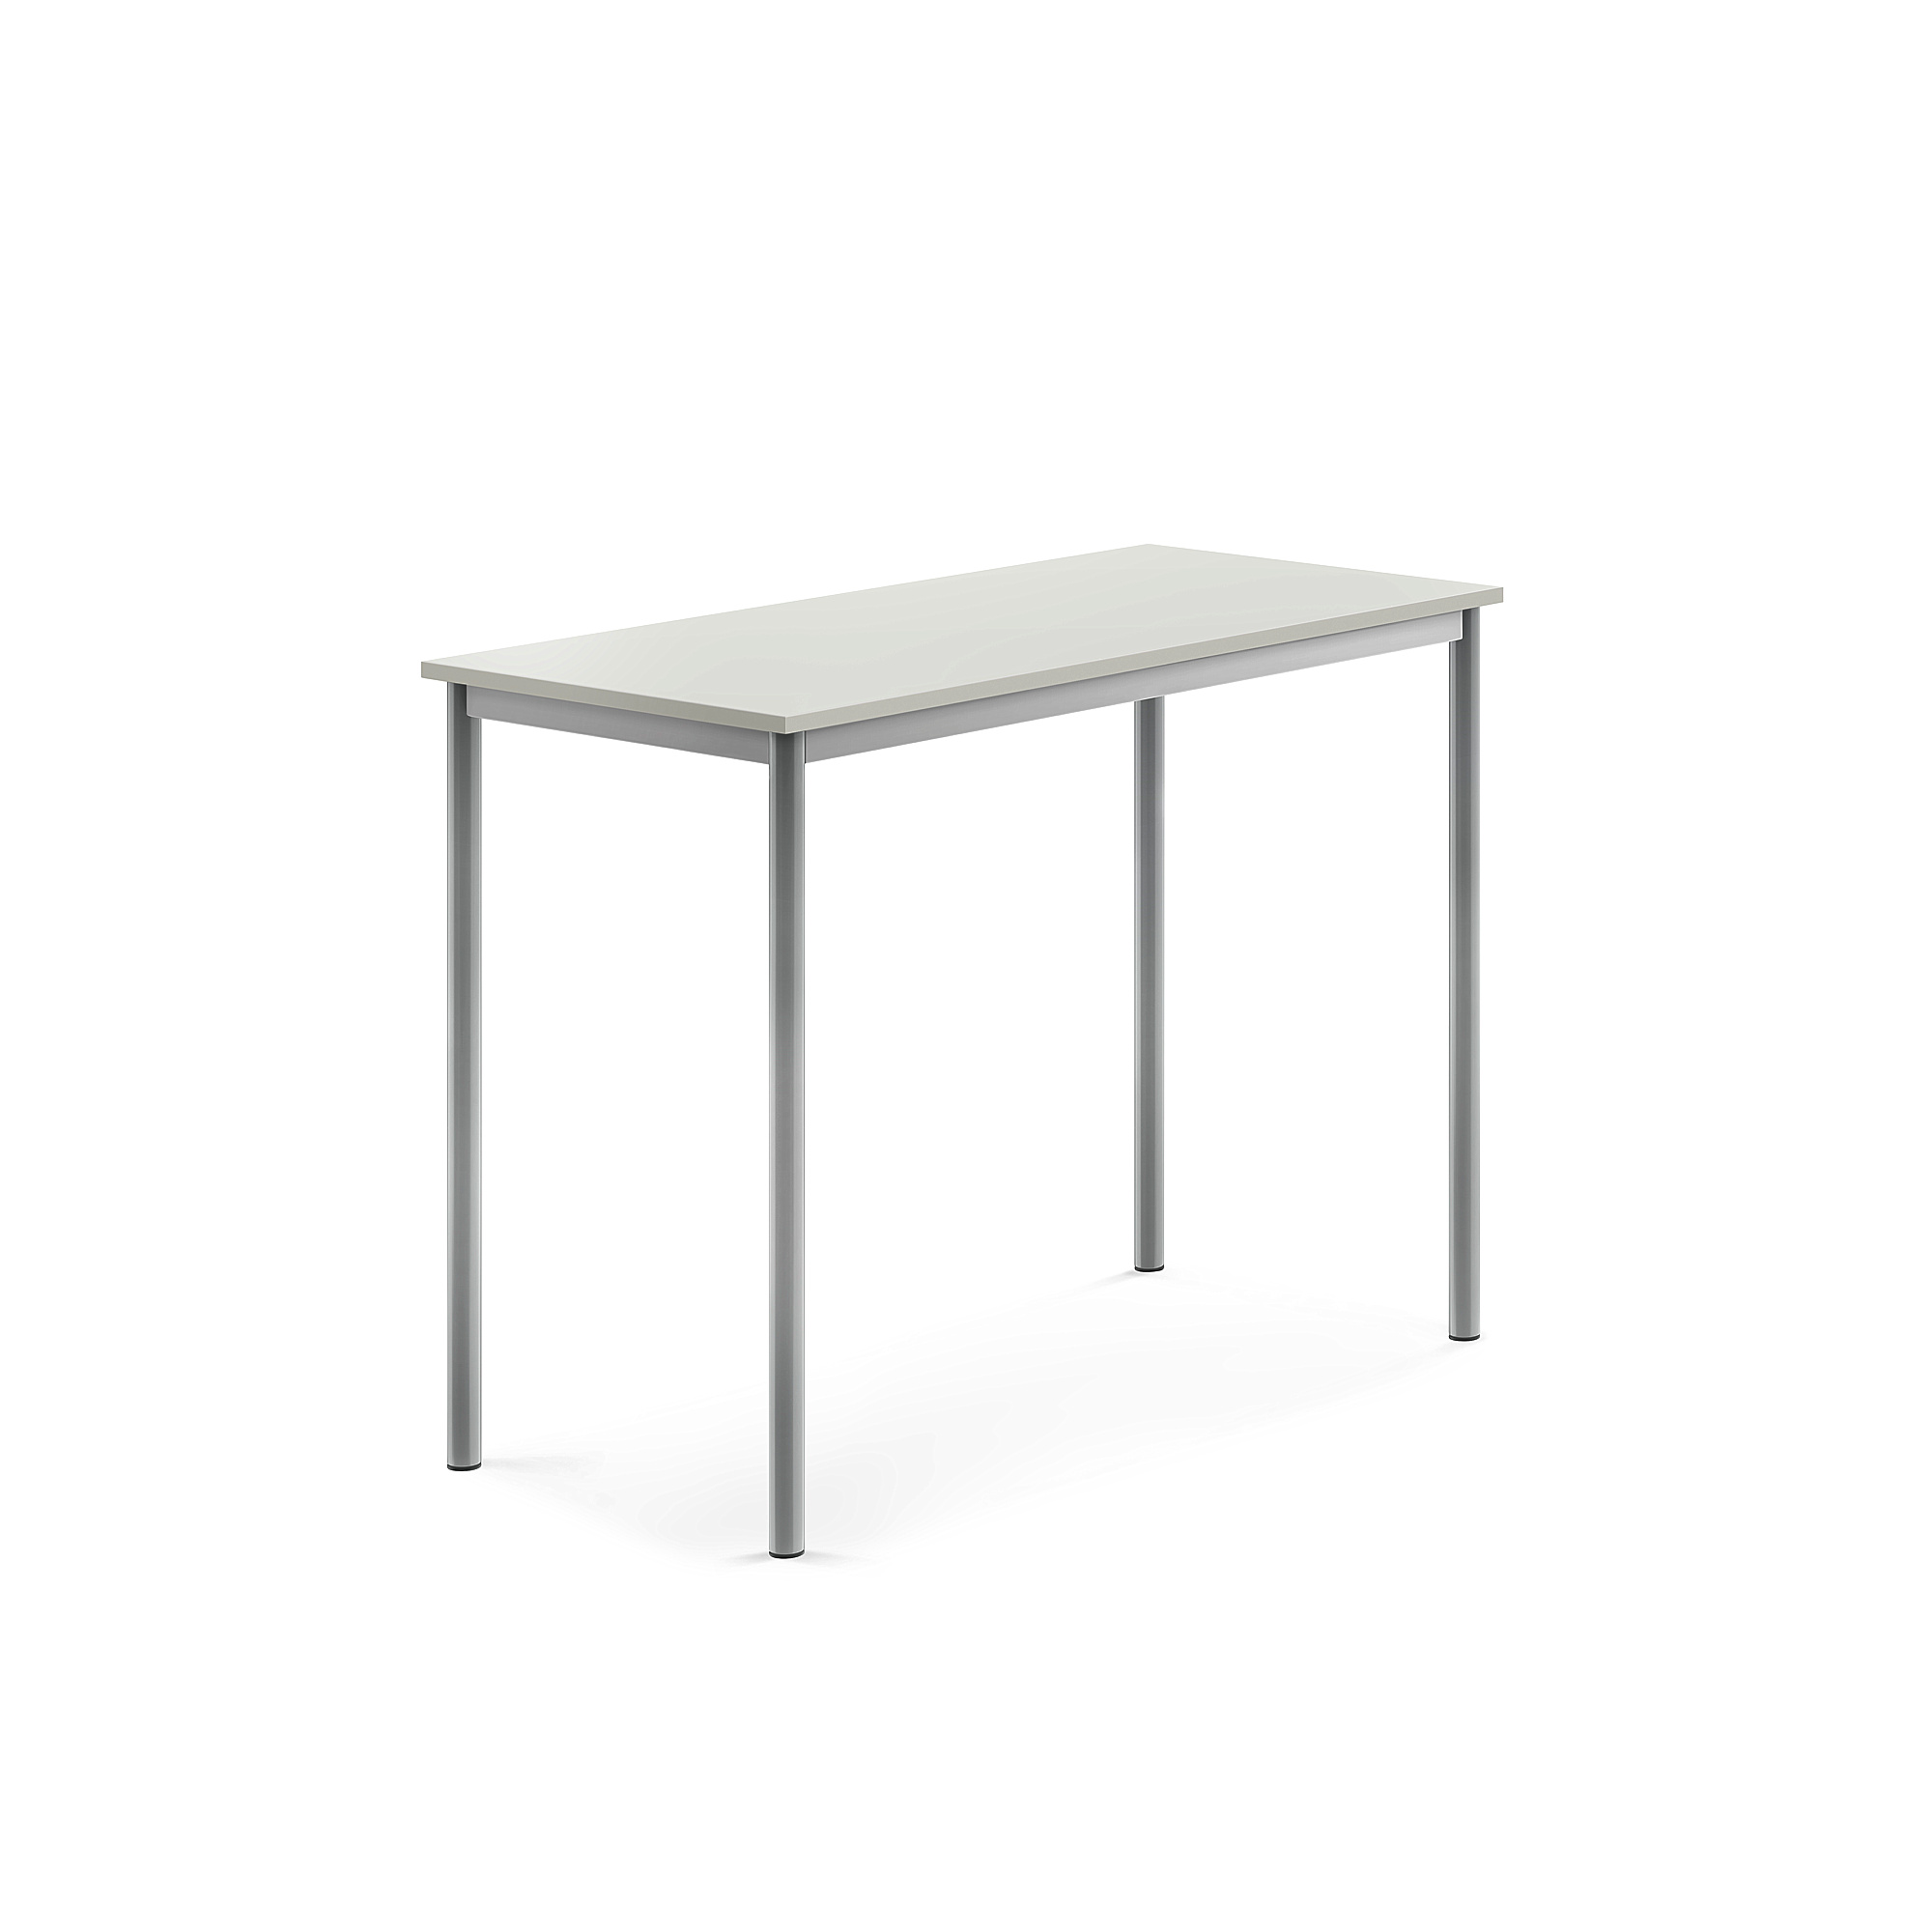 Stůl SONITUS, 1200x600x900 mm, stříbrné nohy, HPL deska tlumící hluk, šedá